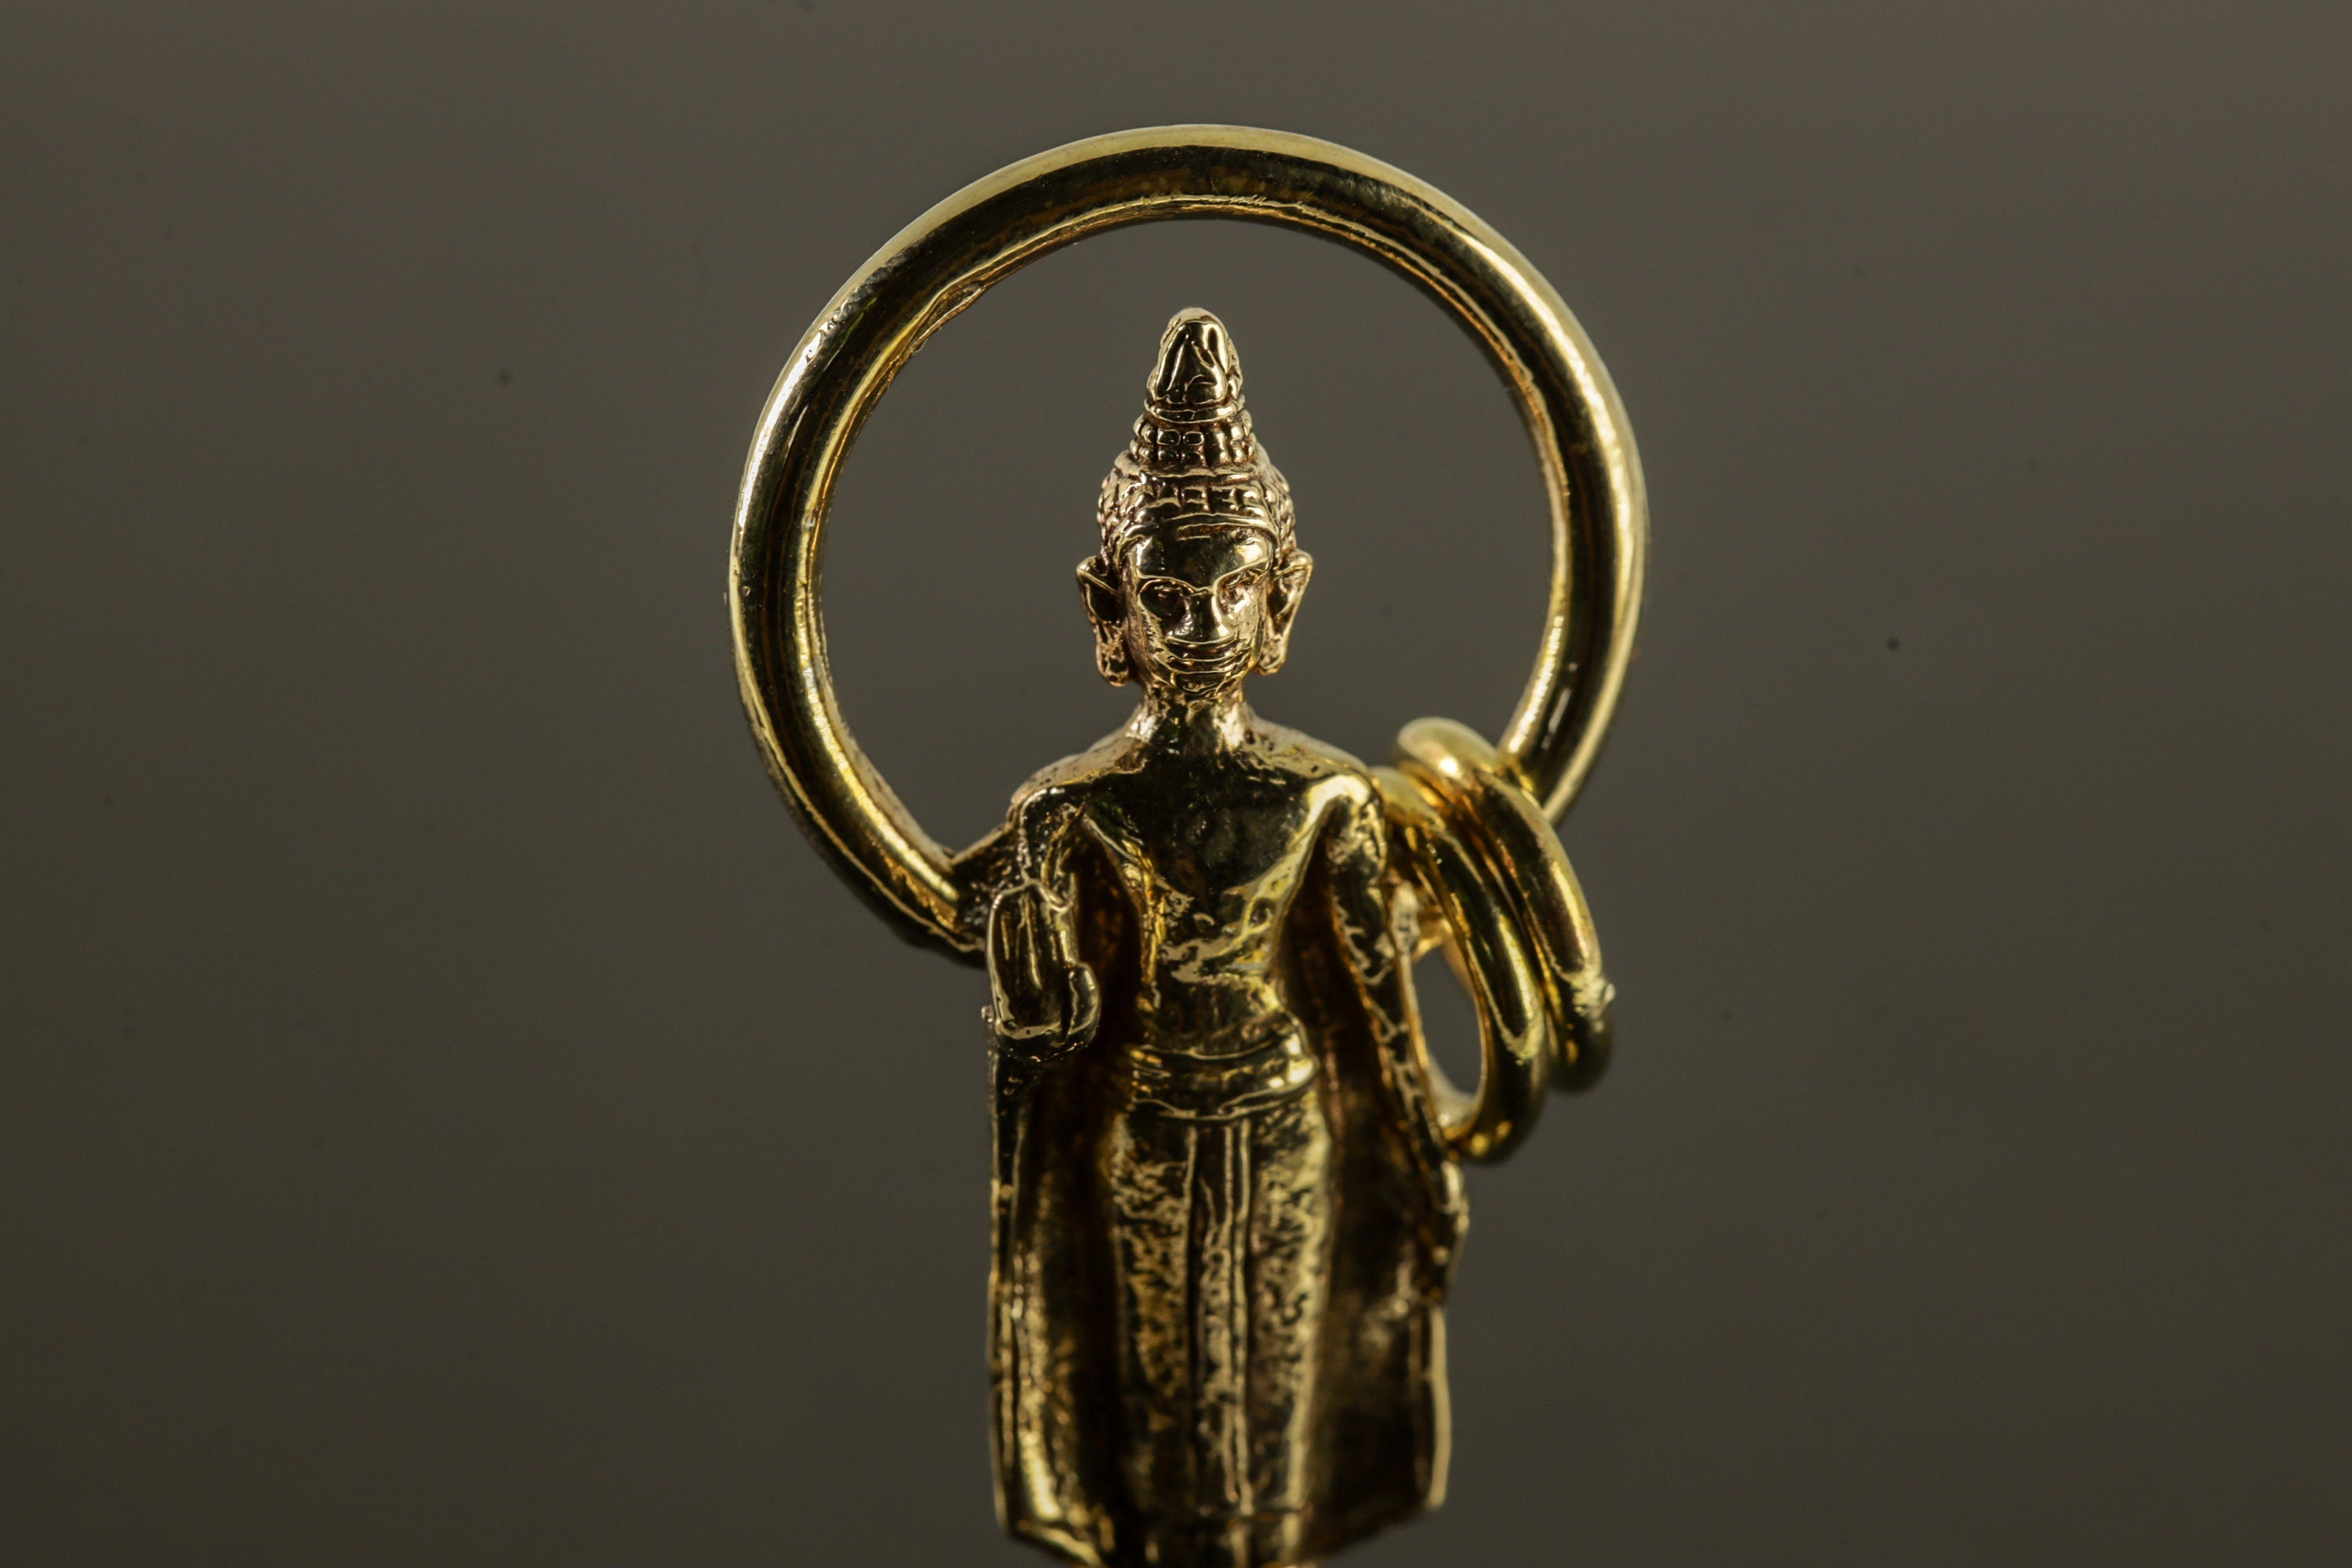 Blessing Aura Verdana Buddha - Gold Plated Brass Cast - Pendant Necklace